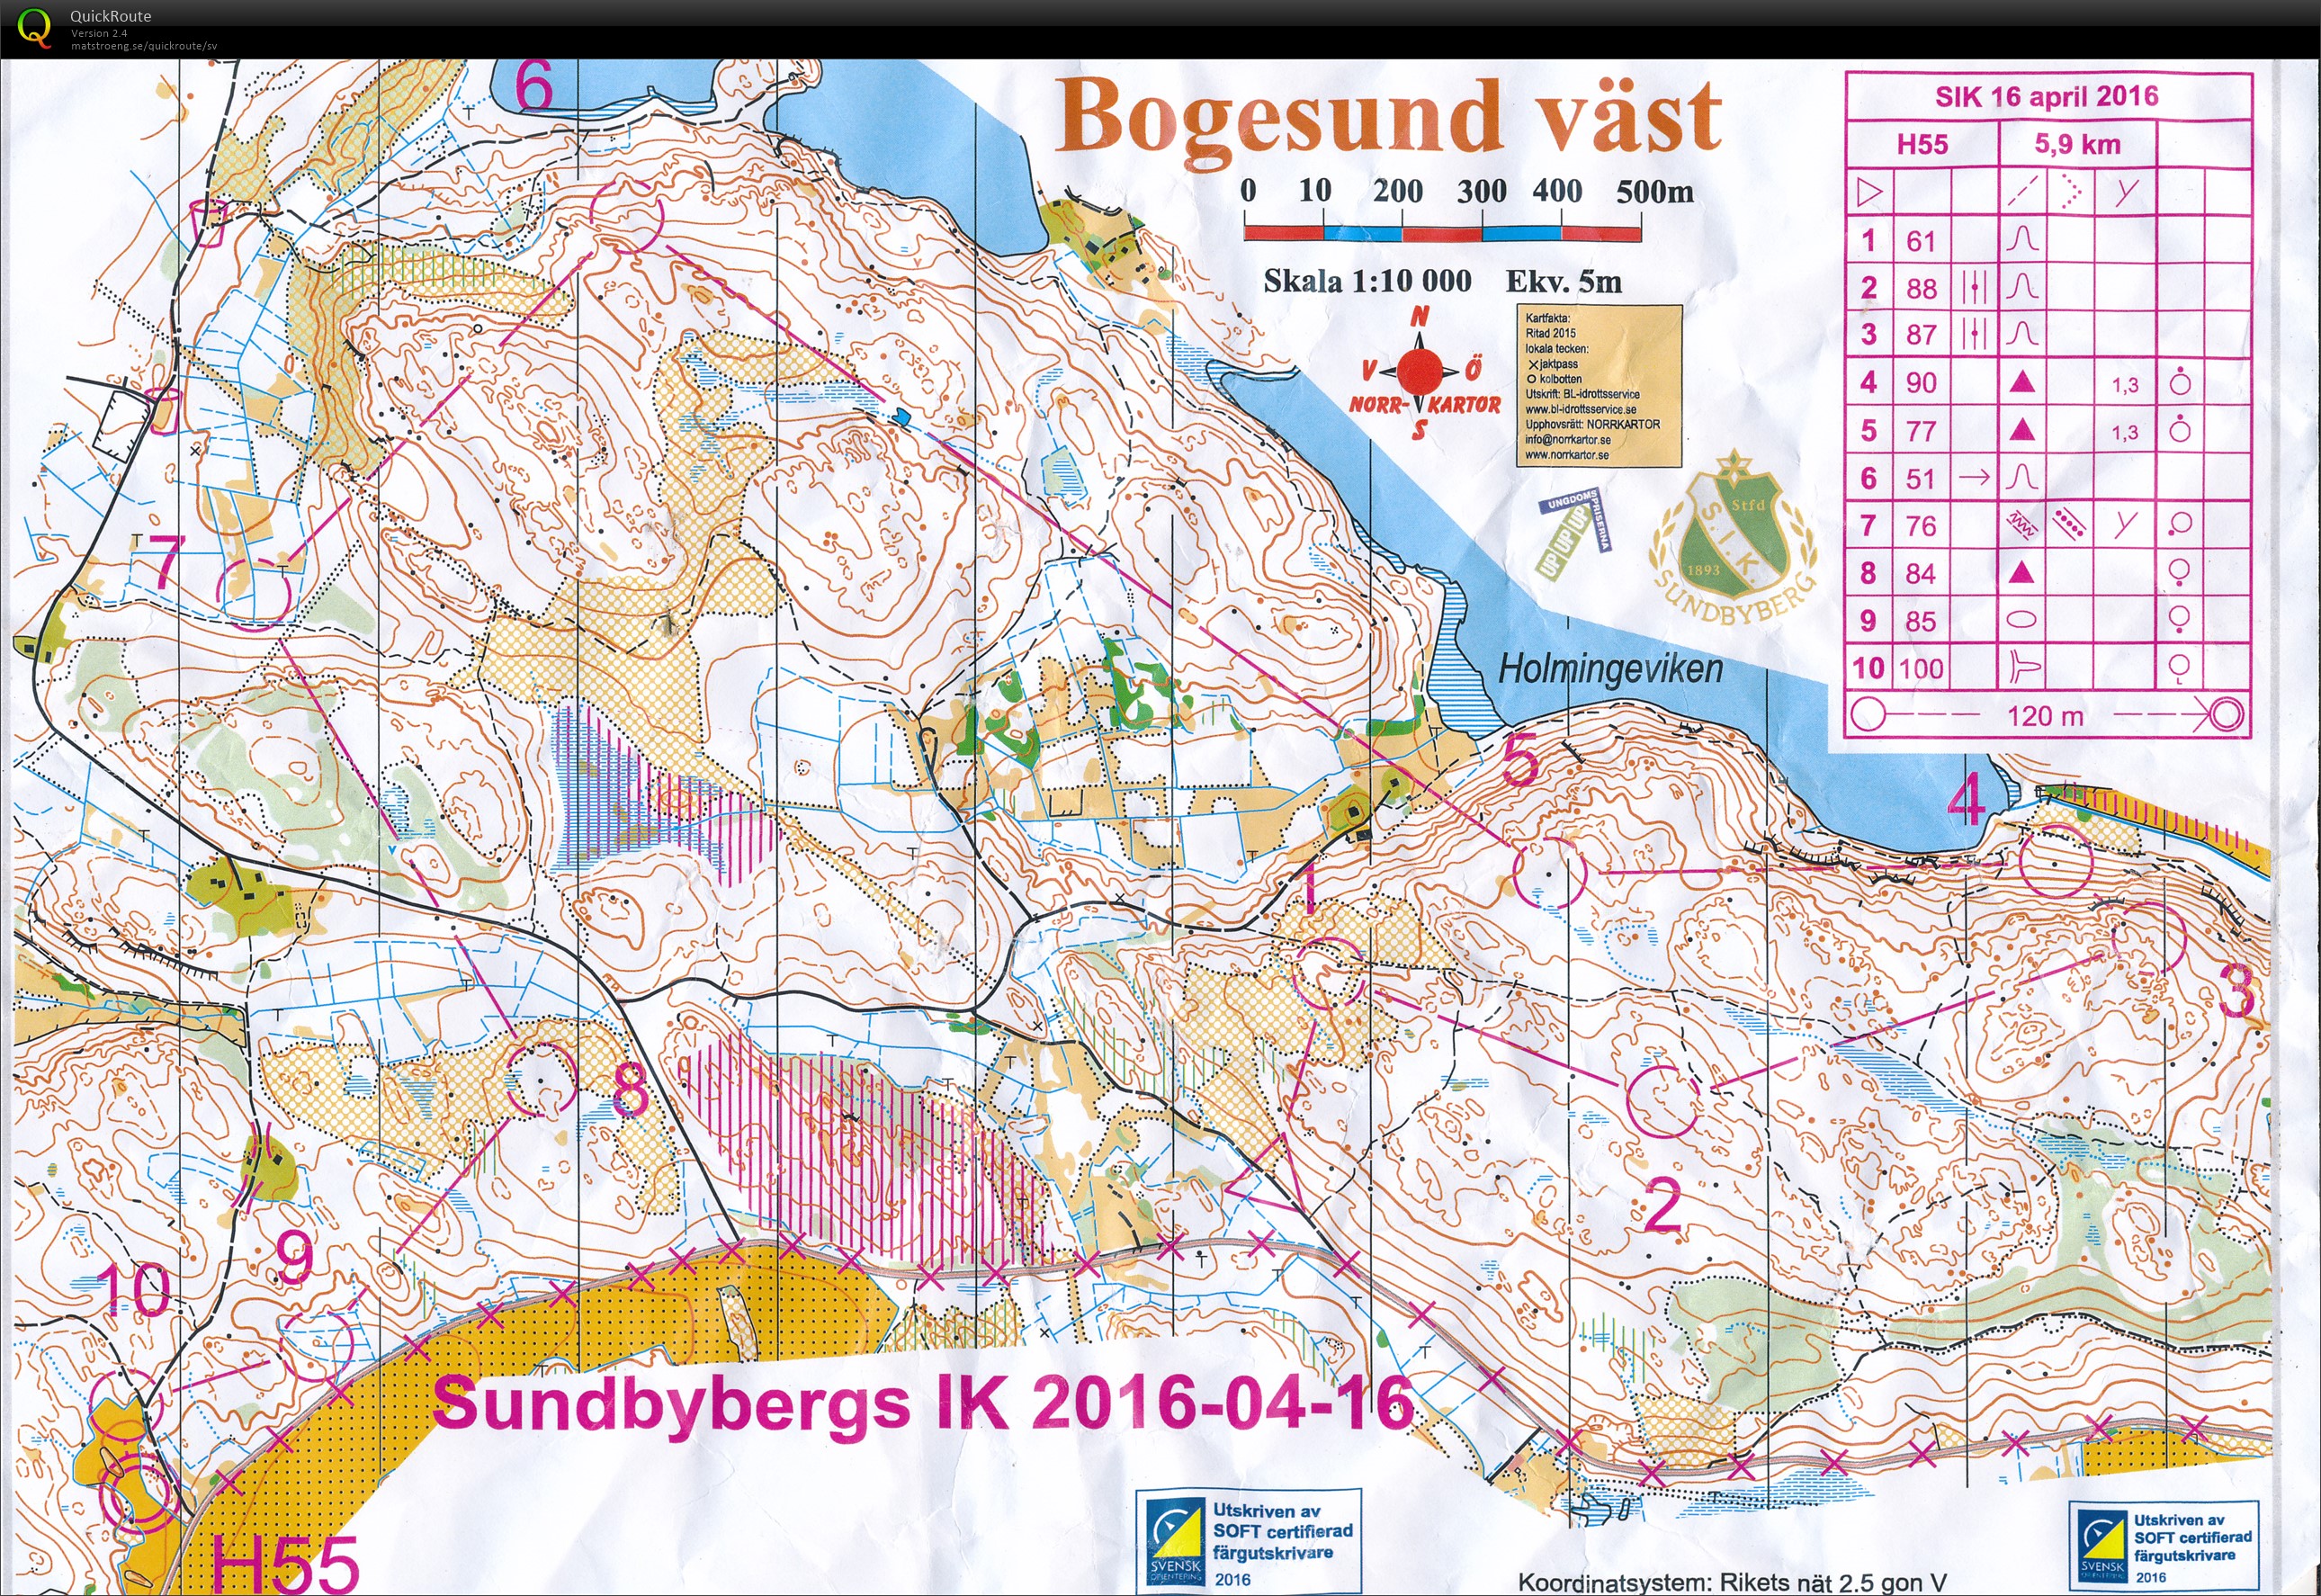 Sundbyberg (2016-04-16)